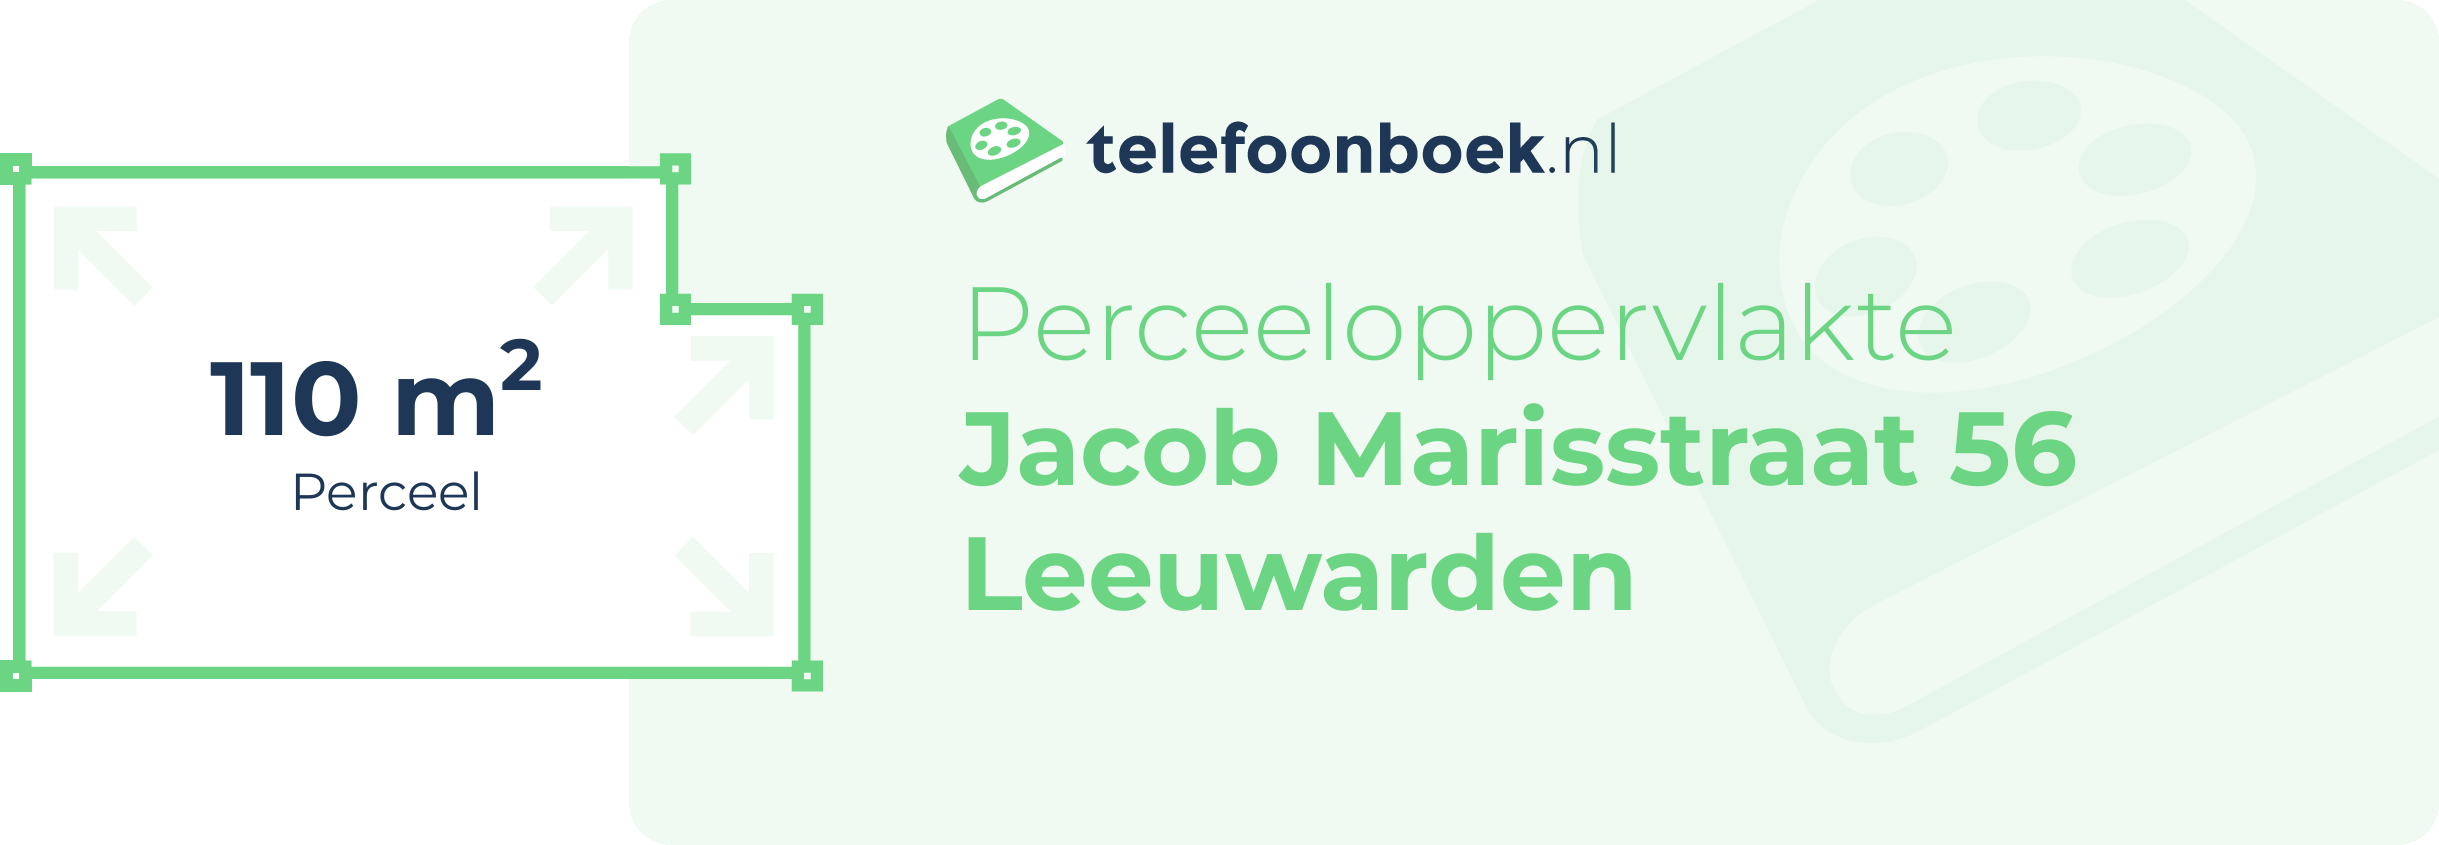 Perceeloppervlakte Jacob Marisstraat 56 Leeuwarden